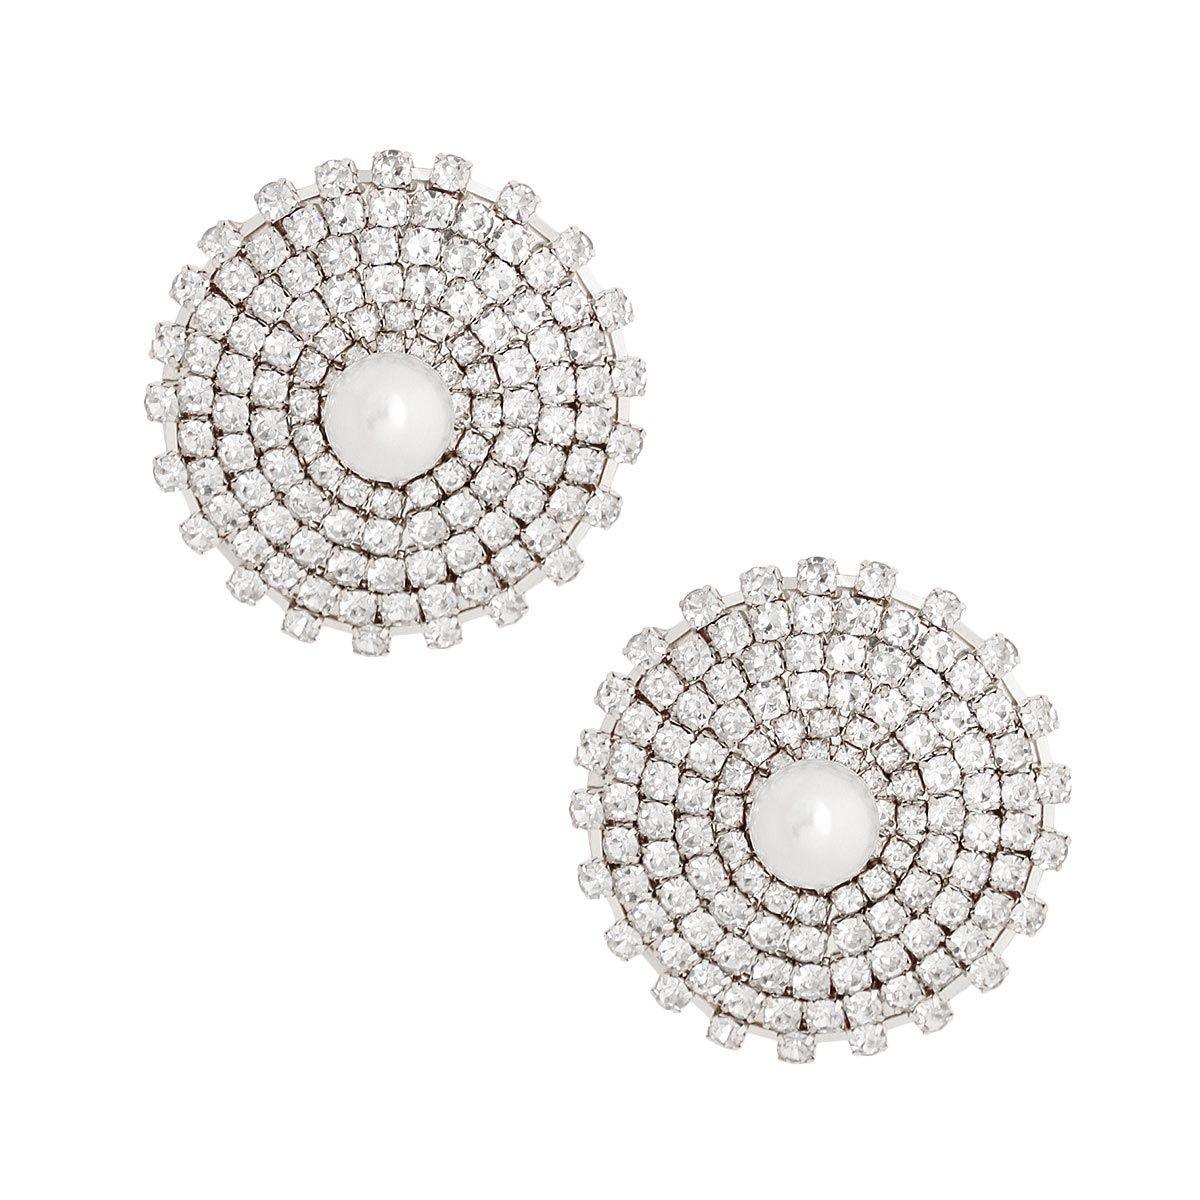 Costume Jewelry: Silver White Pearl and Rhinestone Stud Earrings